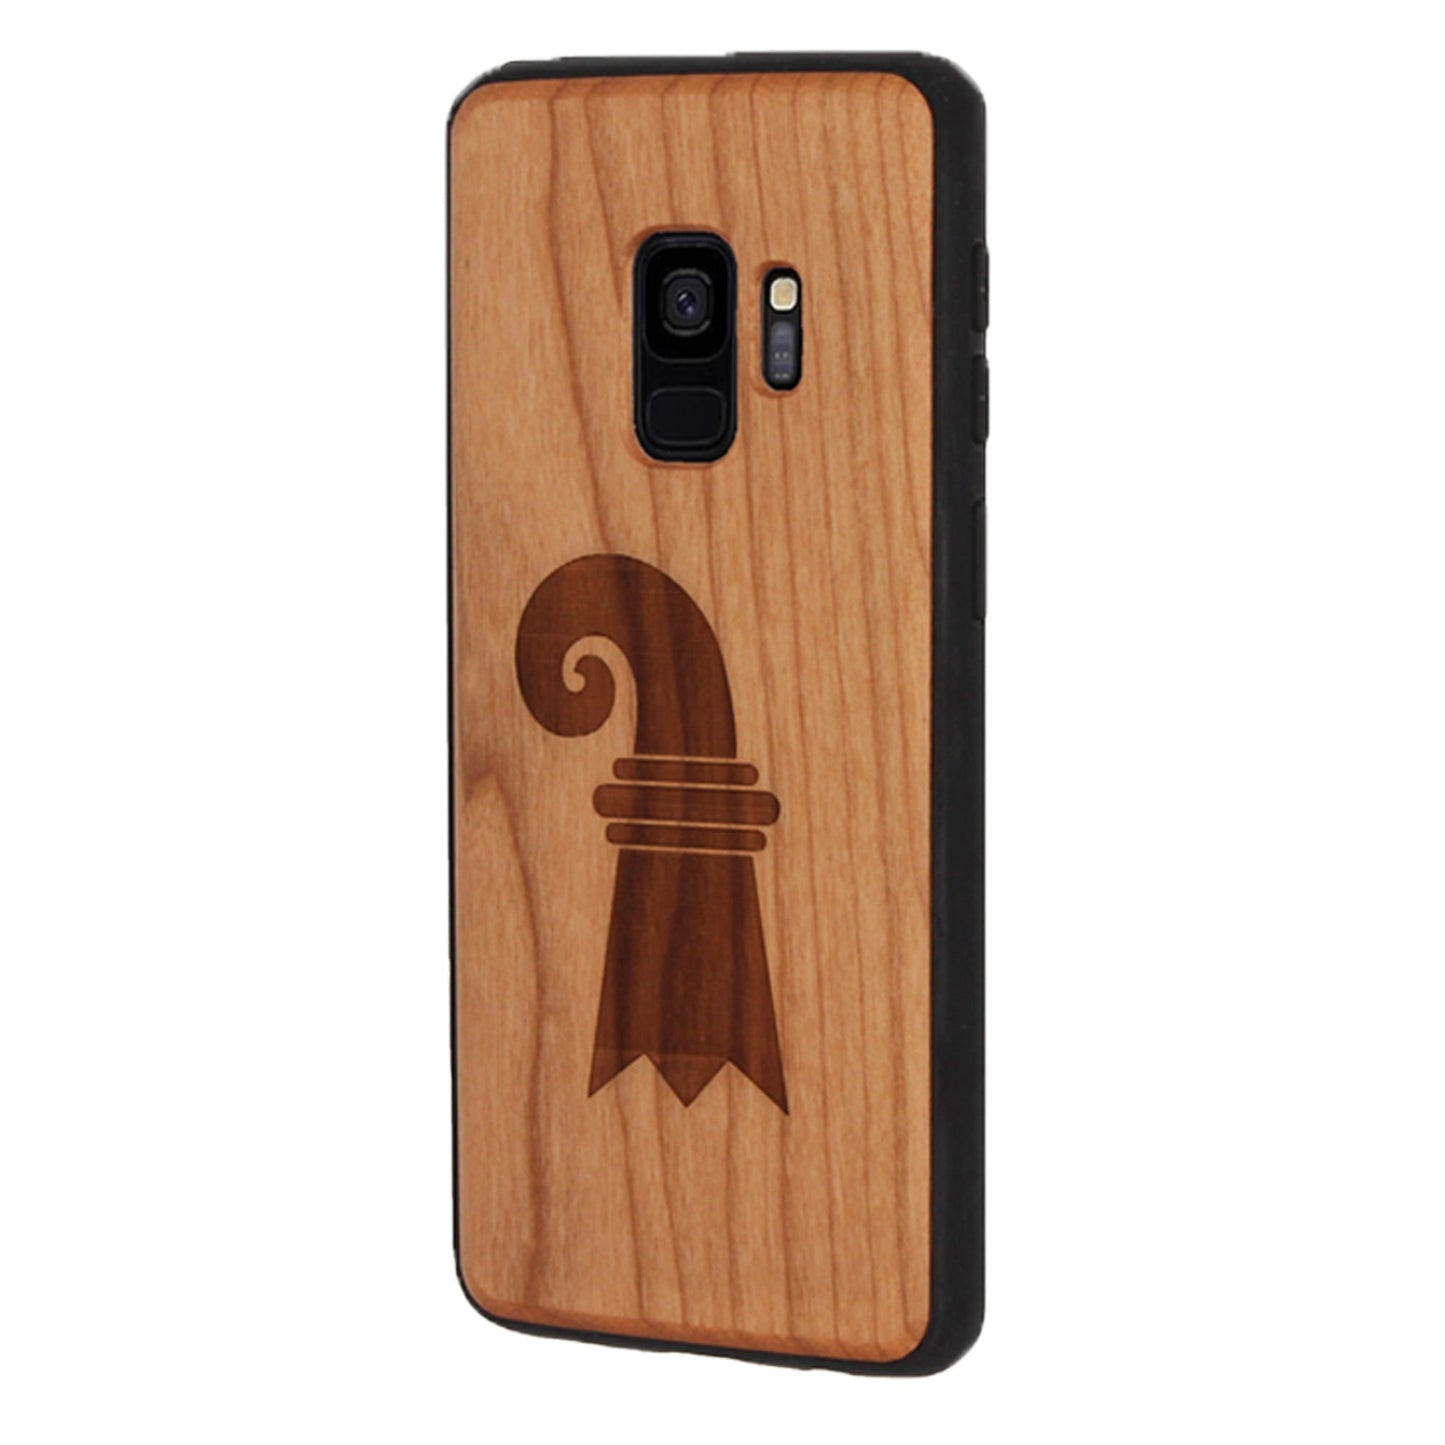 Baslerstab Eden case made of cherry wood for Samsung Galaxy S9